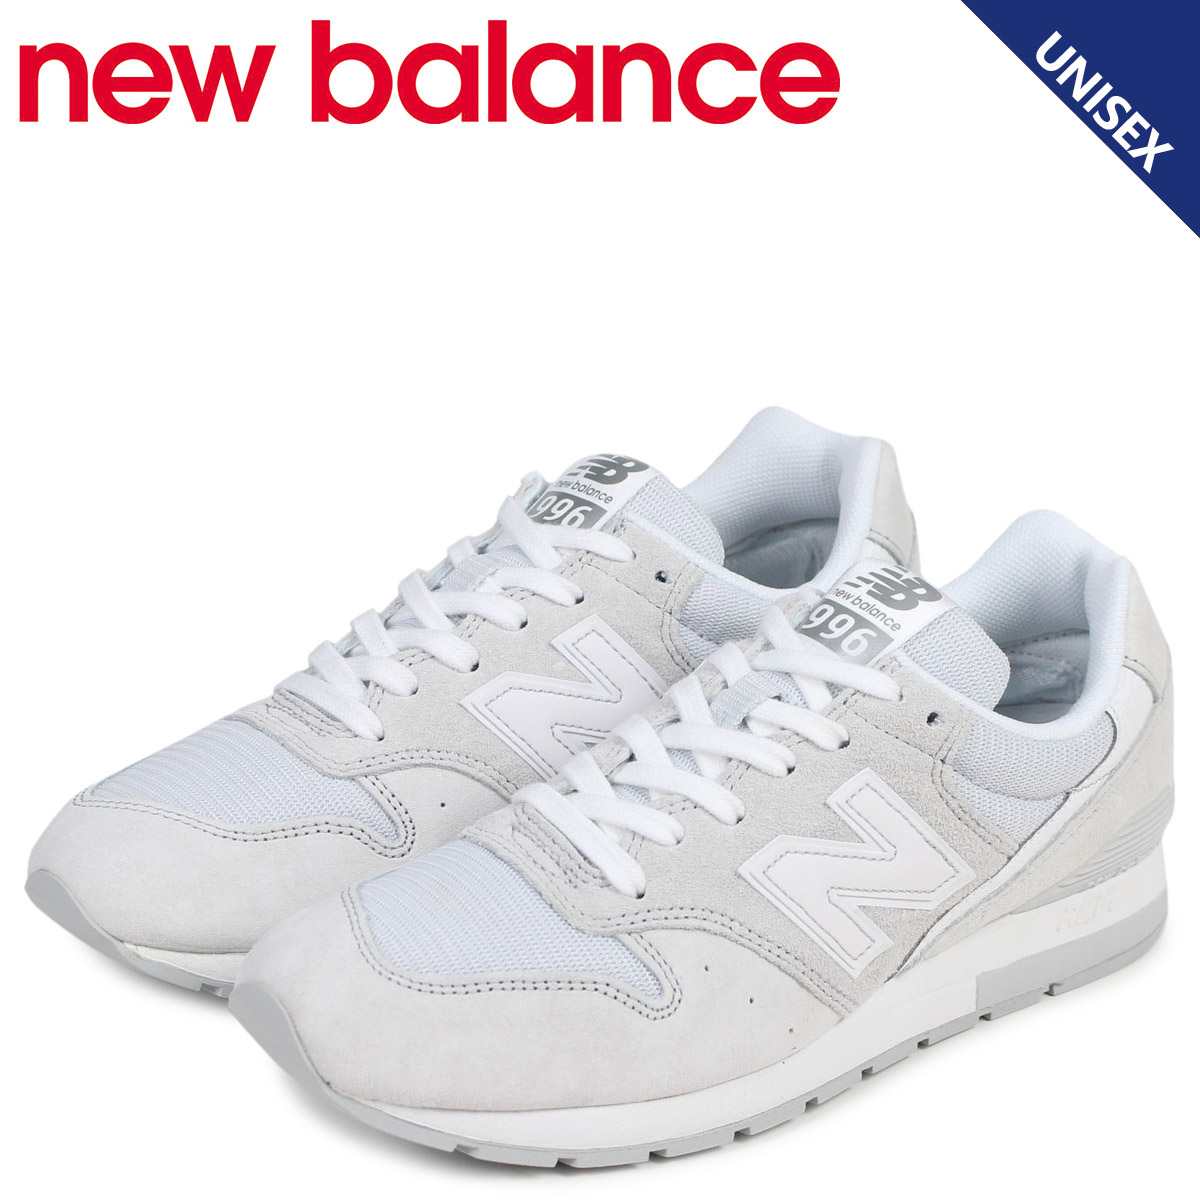 new balance 996 online store